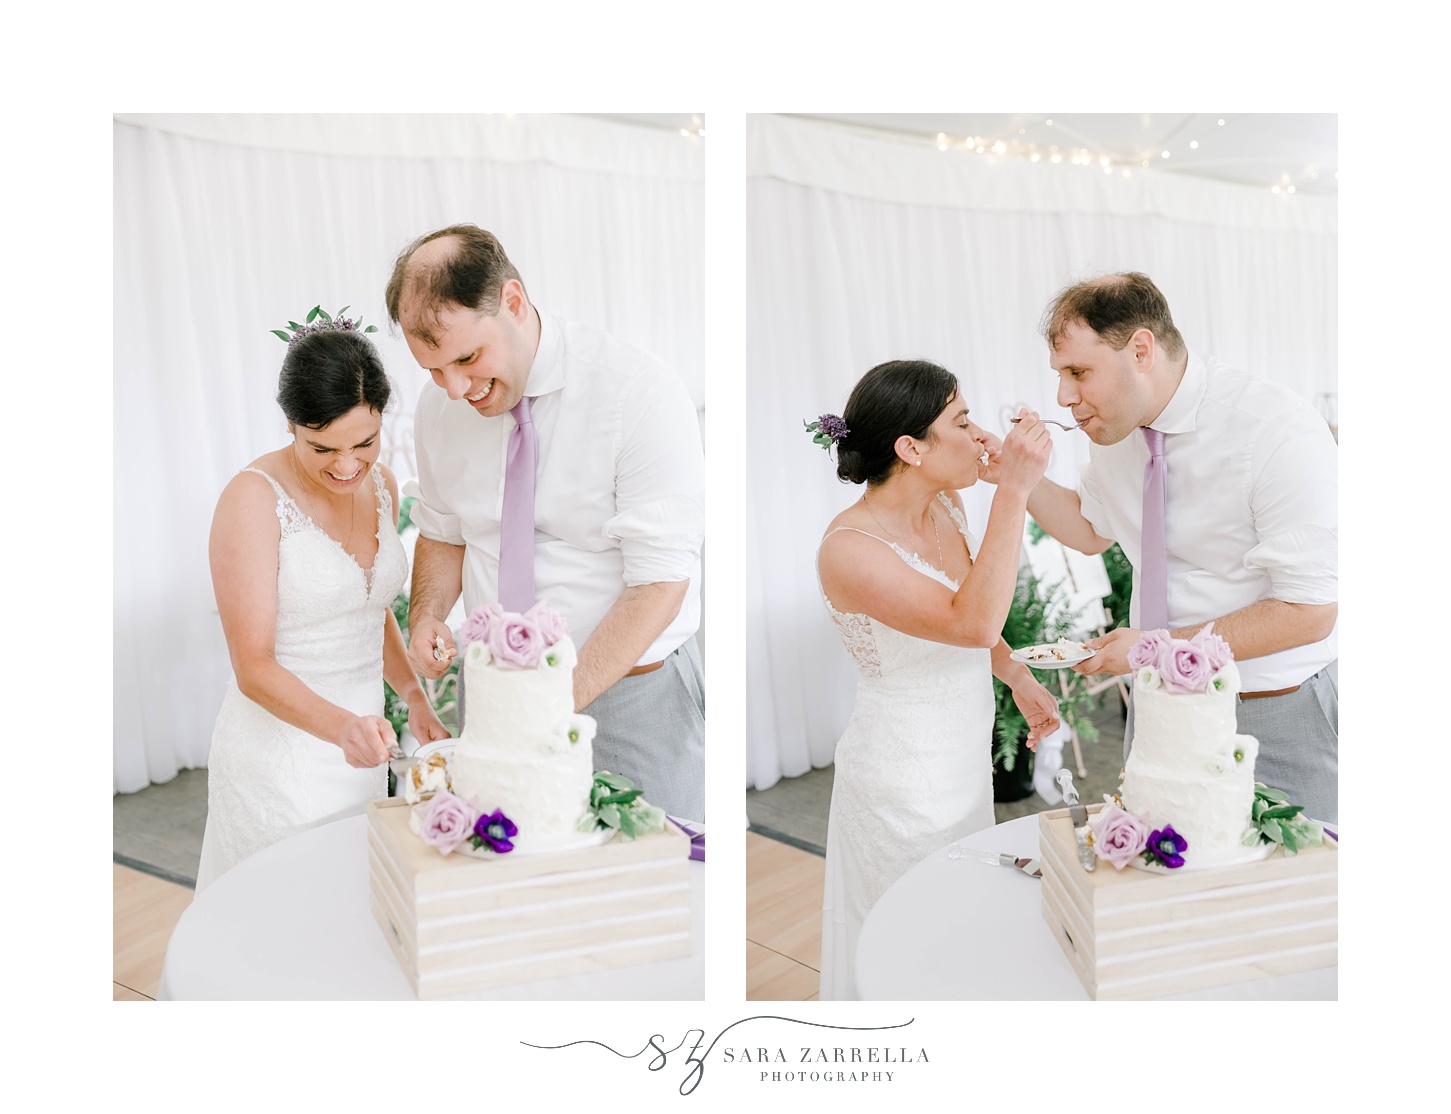 bride and groom cut wedding cake during reception in Bristol RI